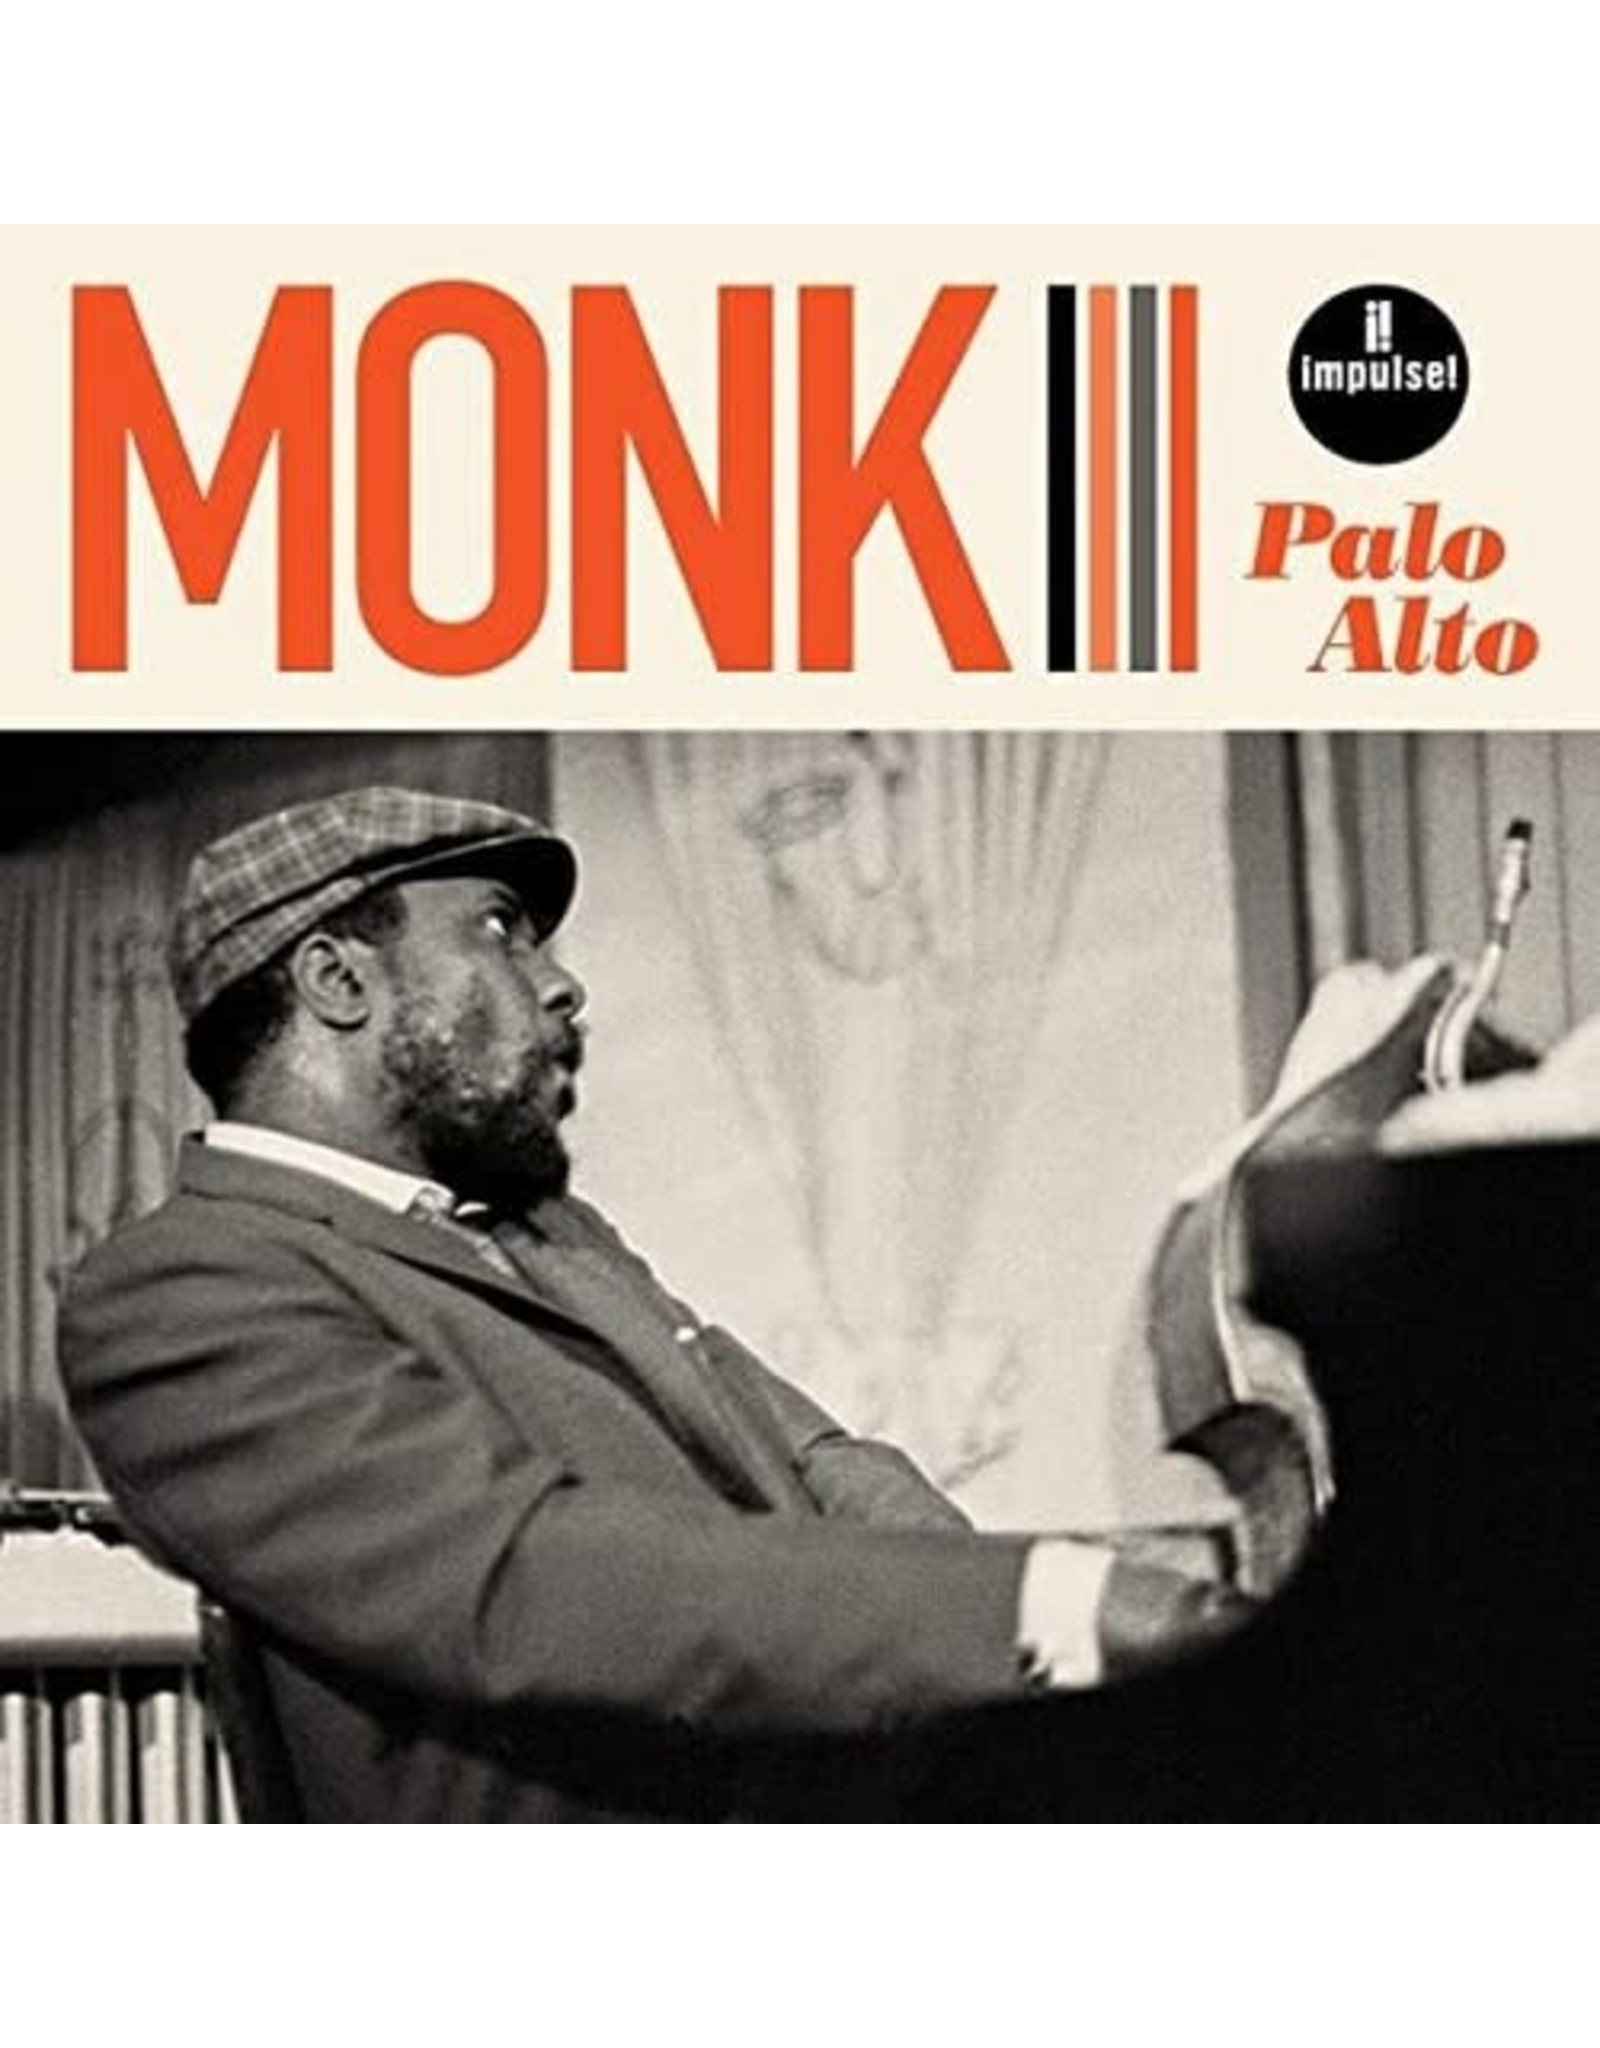 New Vinyl Thelonious Monk - Palo Alto LP